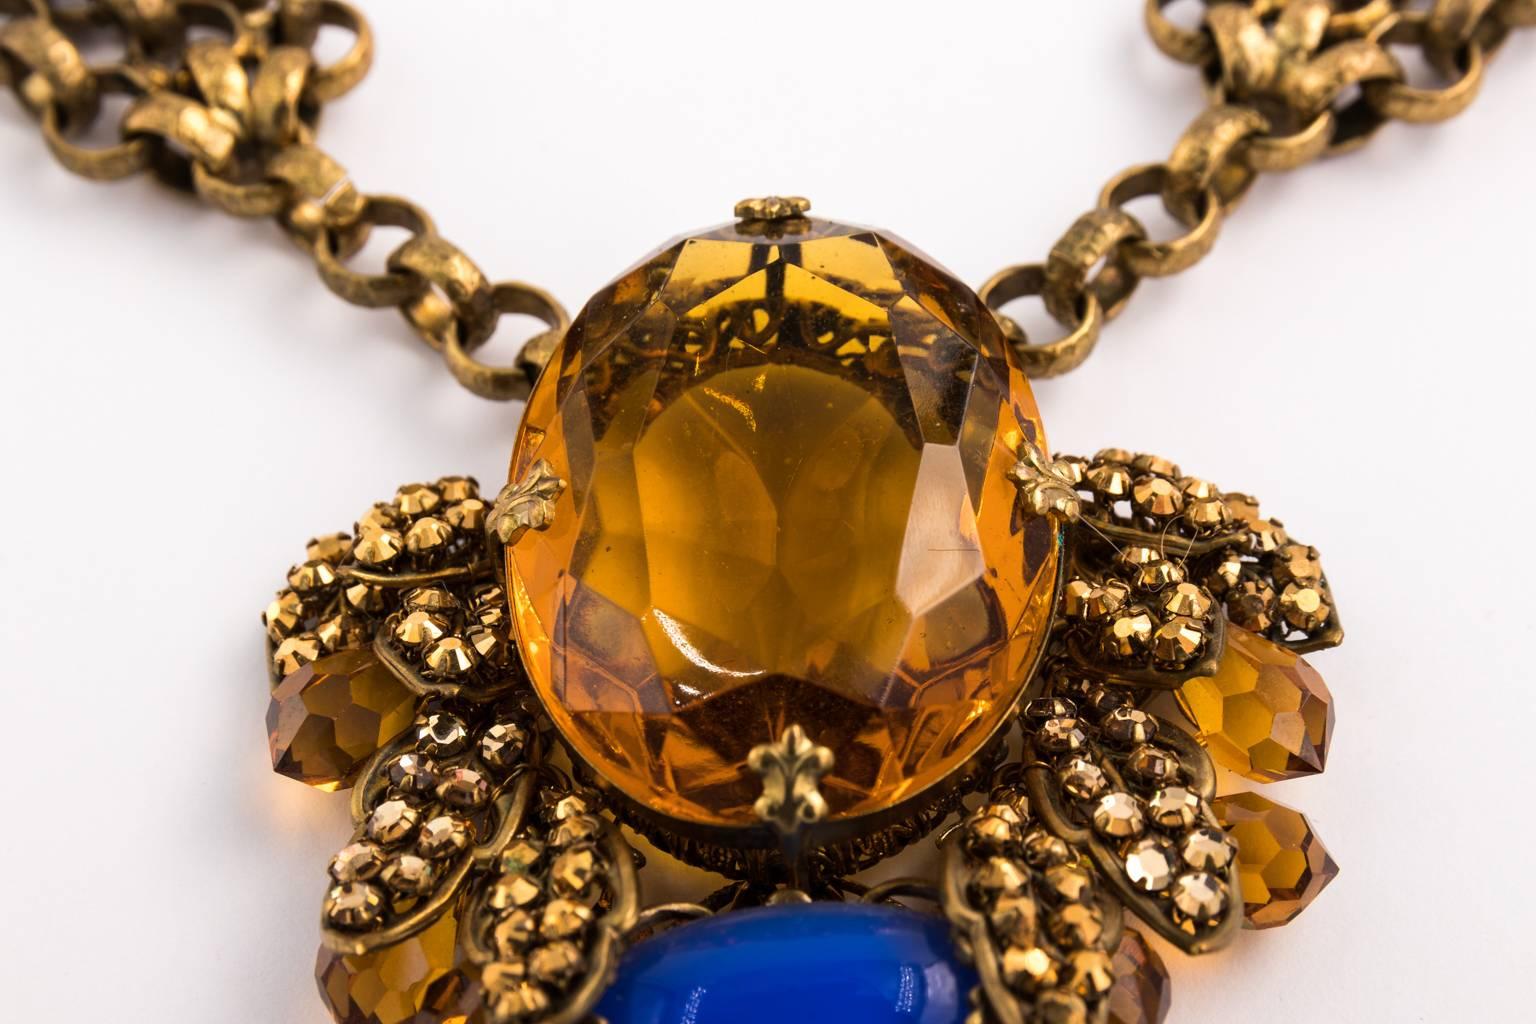 Bijoux Heart Necklace with Large Citrine Glass Centre Piece by Dita Von Teese 10